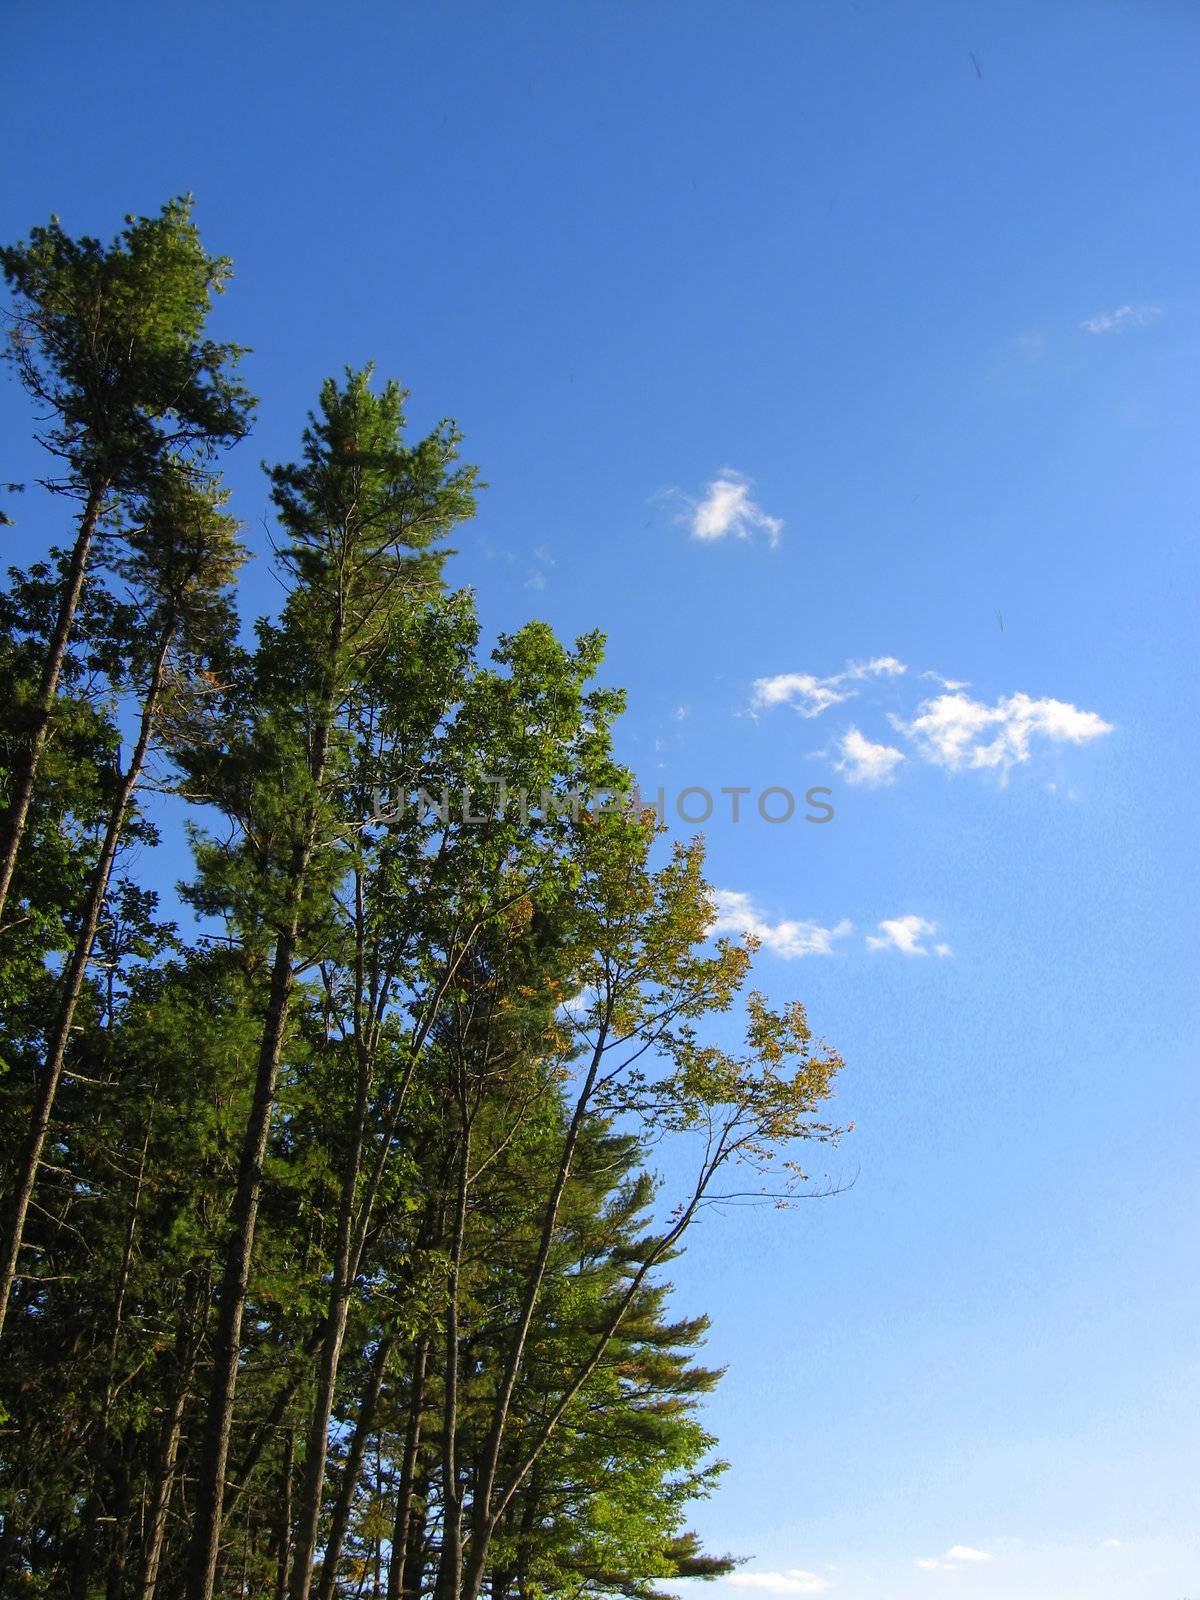 Trees Skyward by loongirl